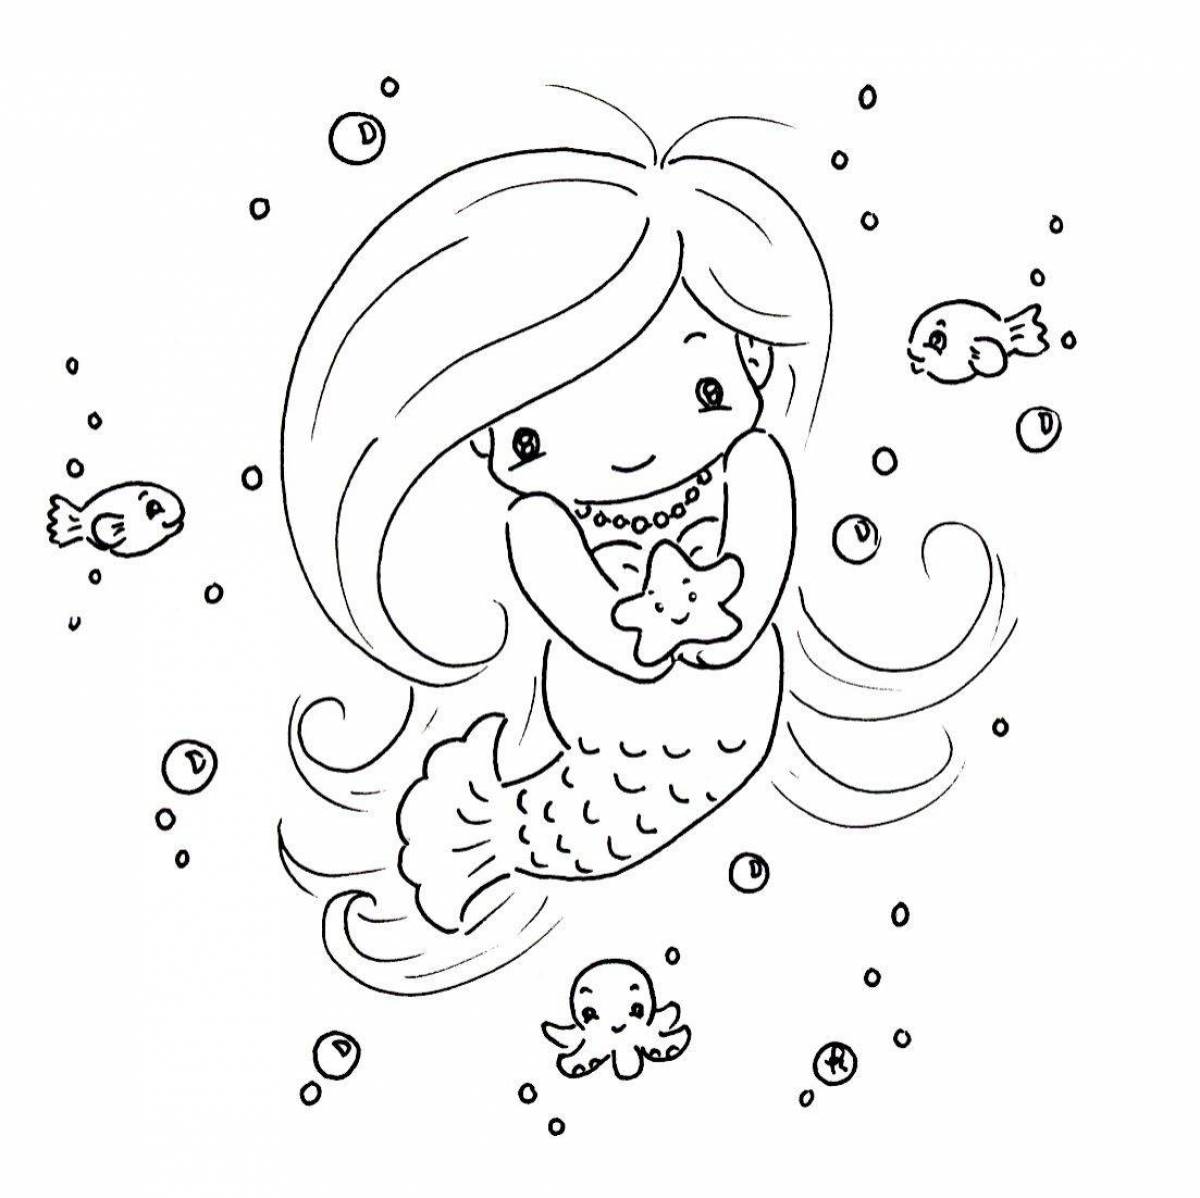 Playful mermaid coloring book for kids